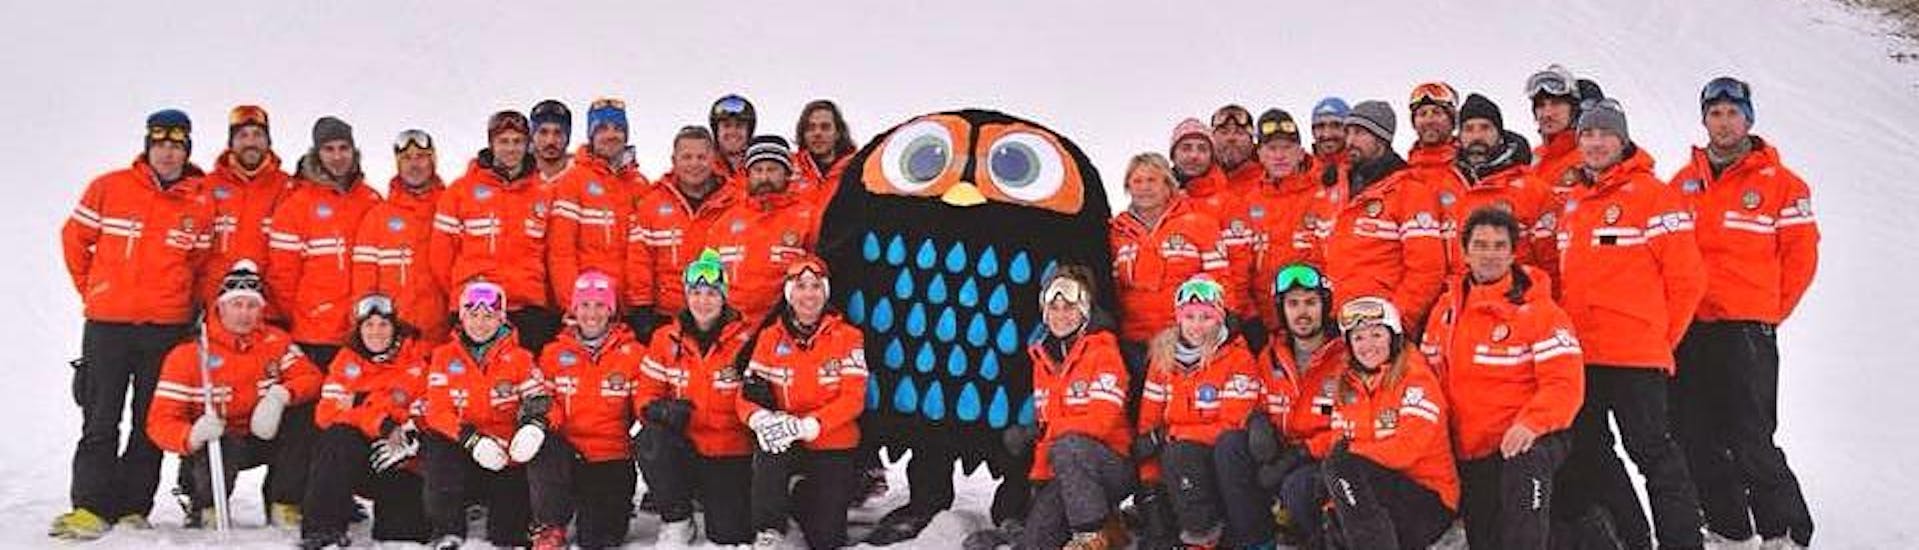 The Ski Lessons for Adults - All Levels is being cheered up by Tino il Civettino, the mascot of the Ski School  Scuola Italiana di sci Civetta.